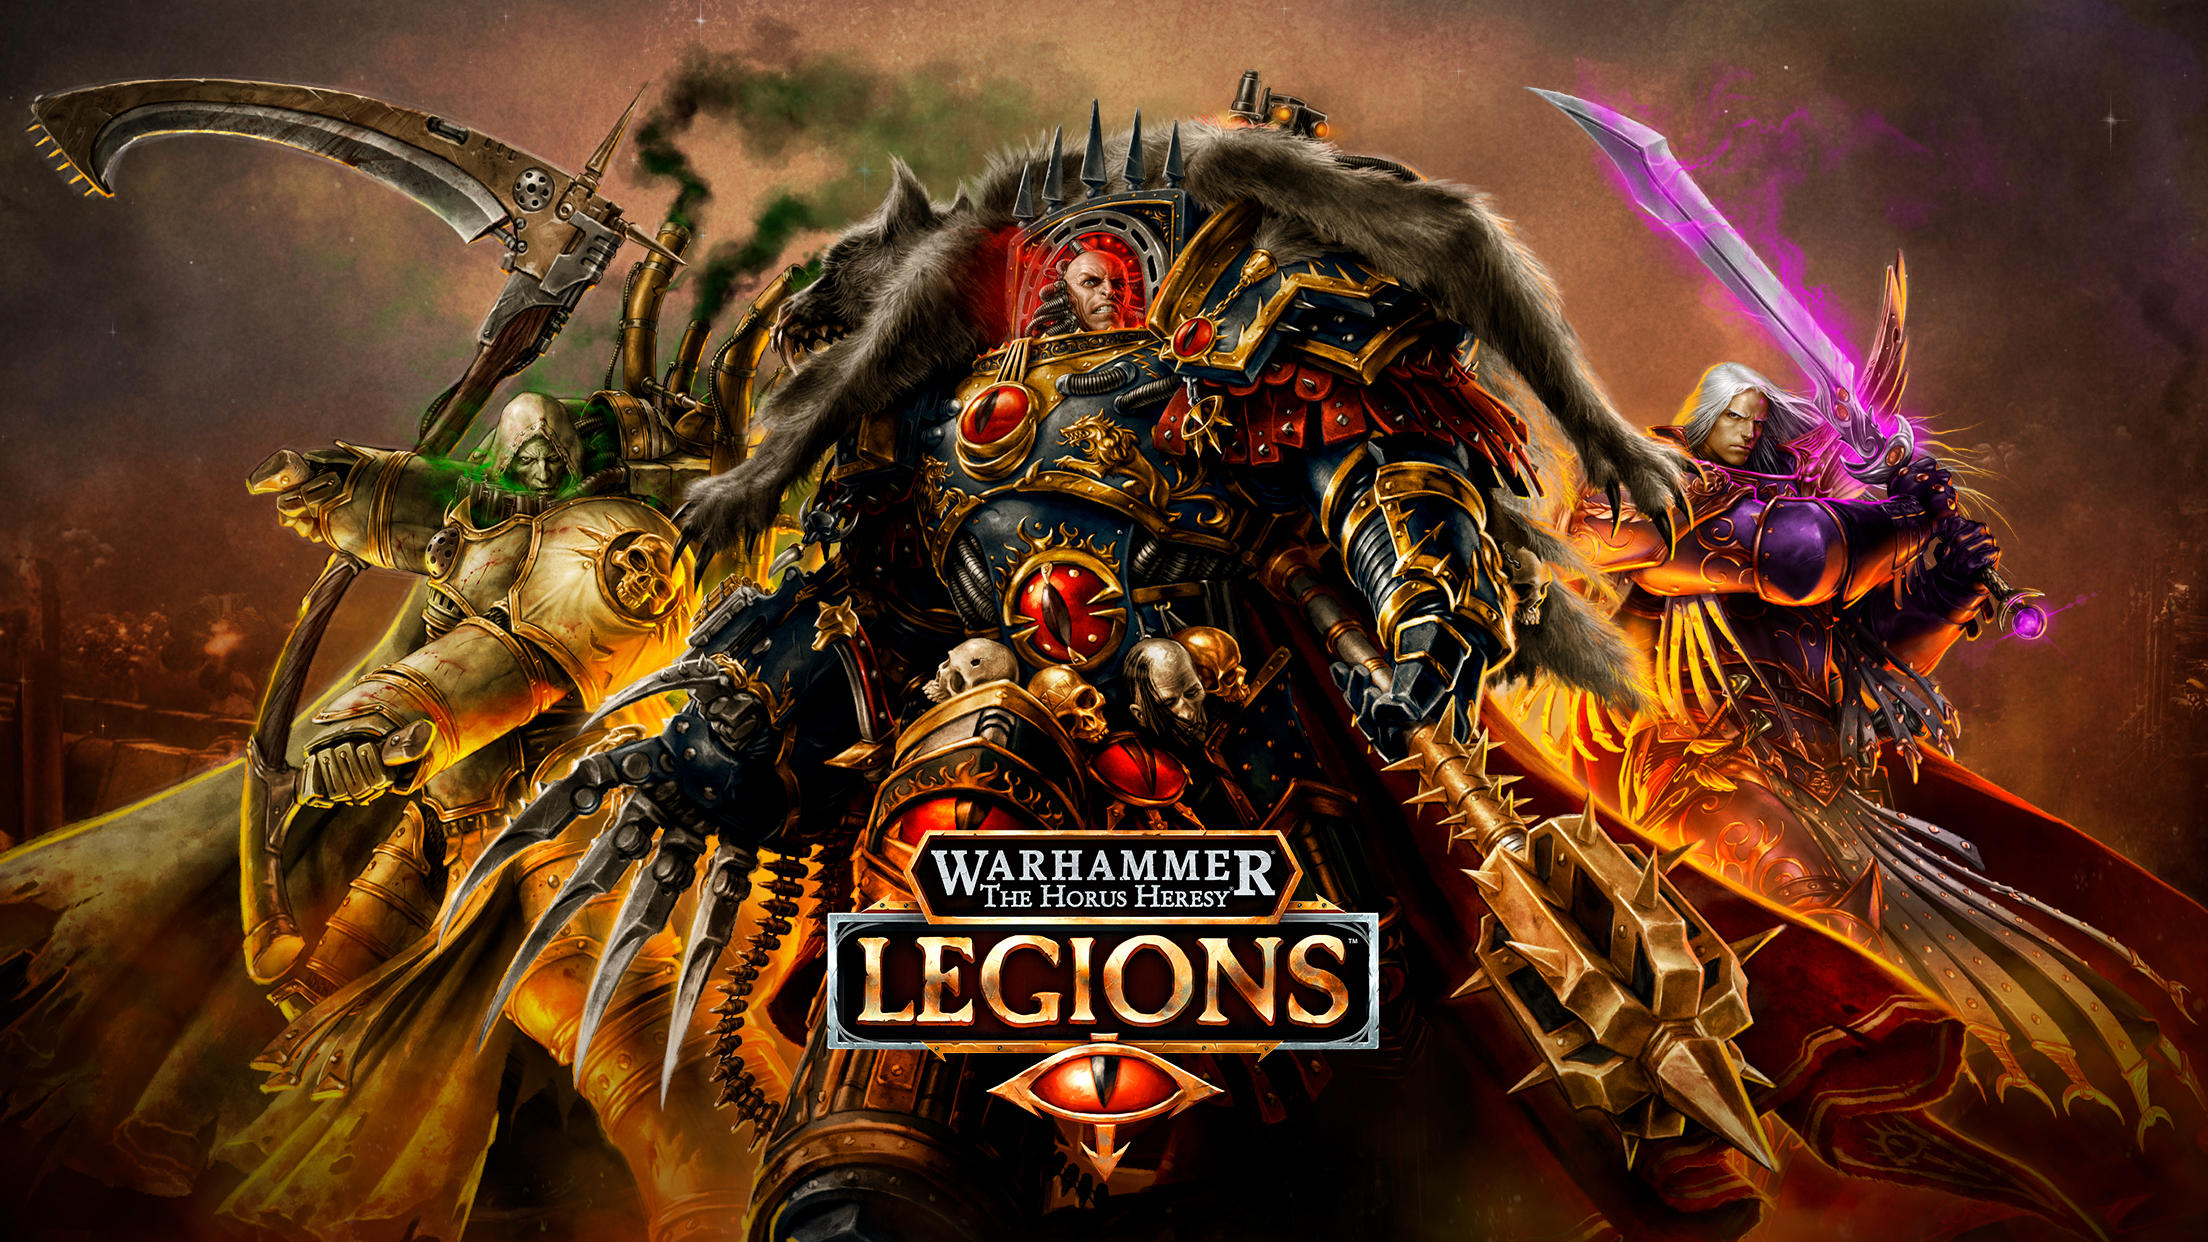 Screenshot 1 of Warhammer Horus กองทหารนอกรีต 3.3.0